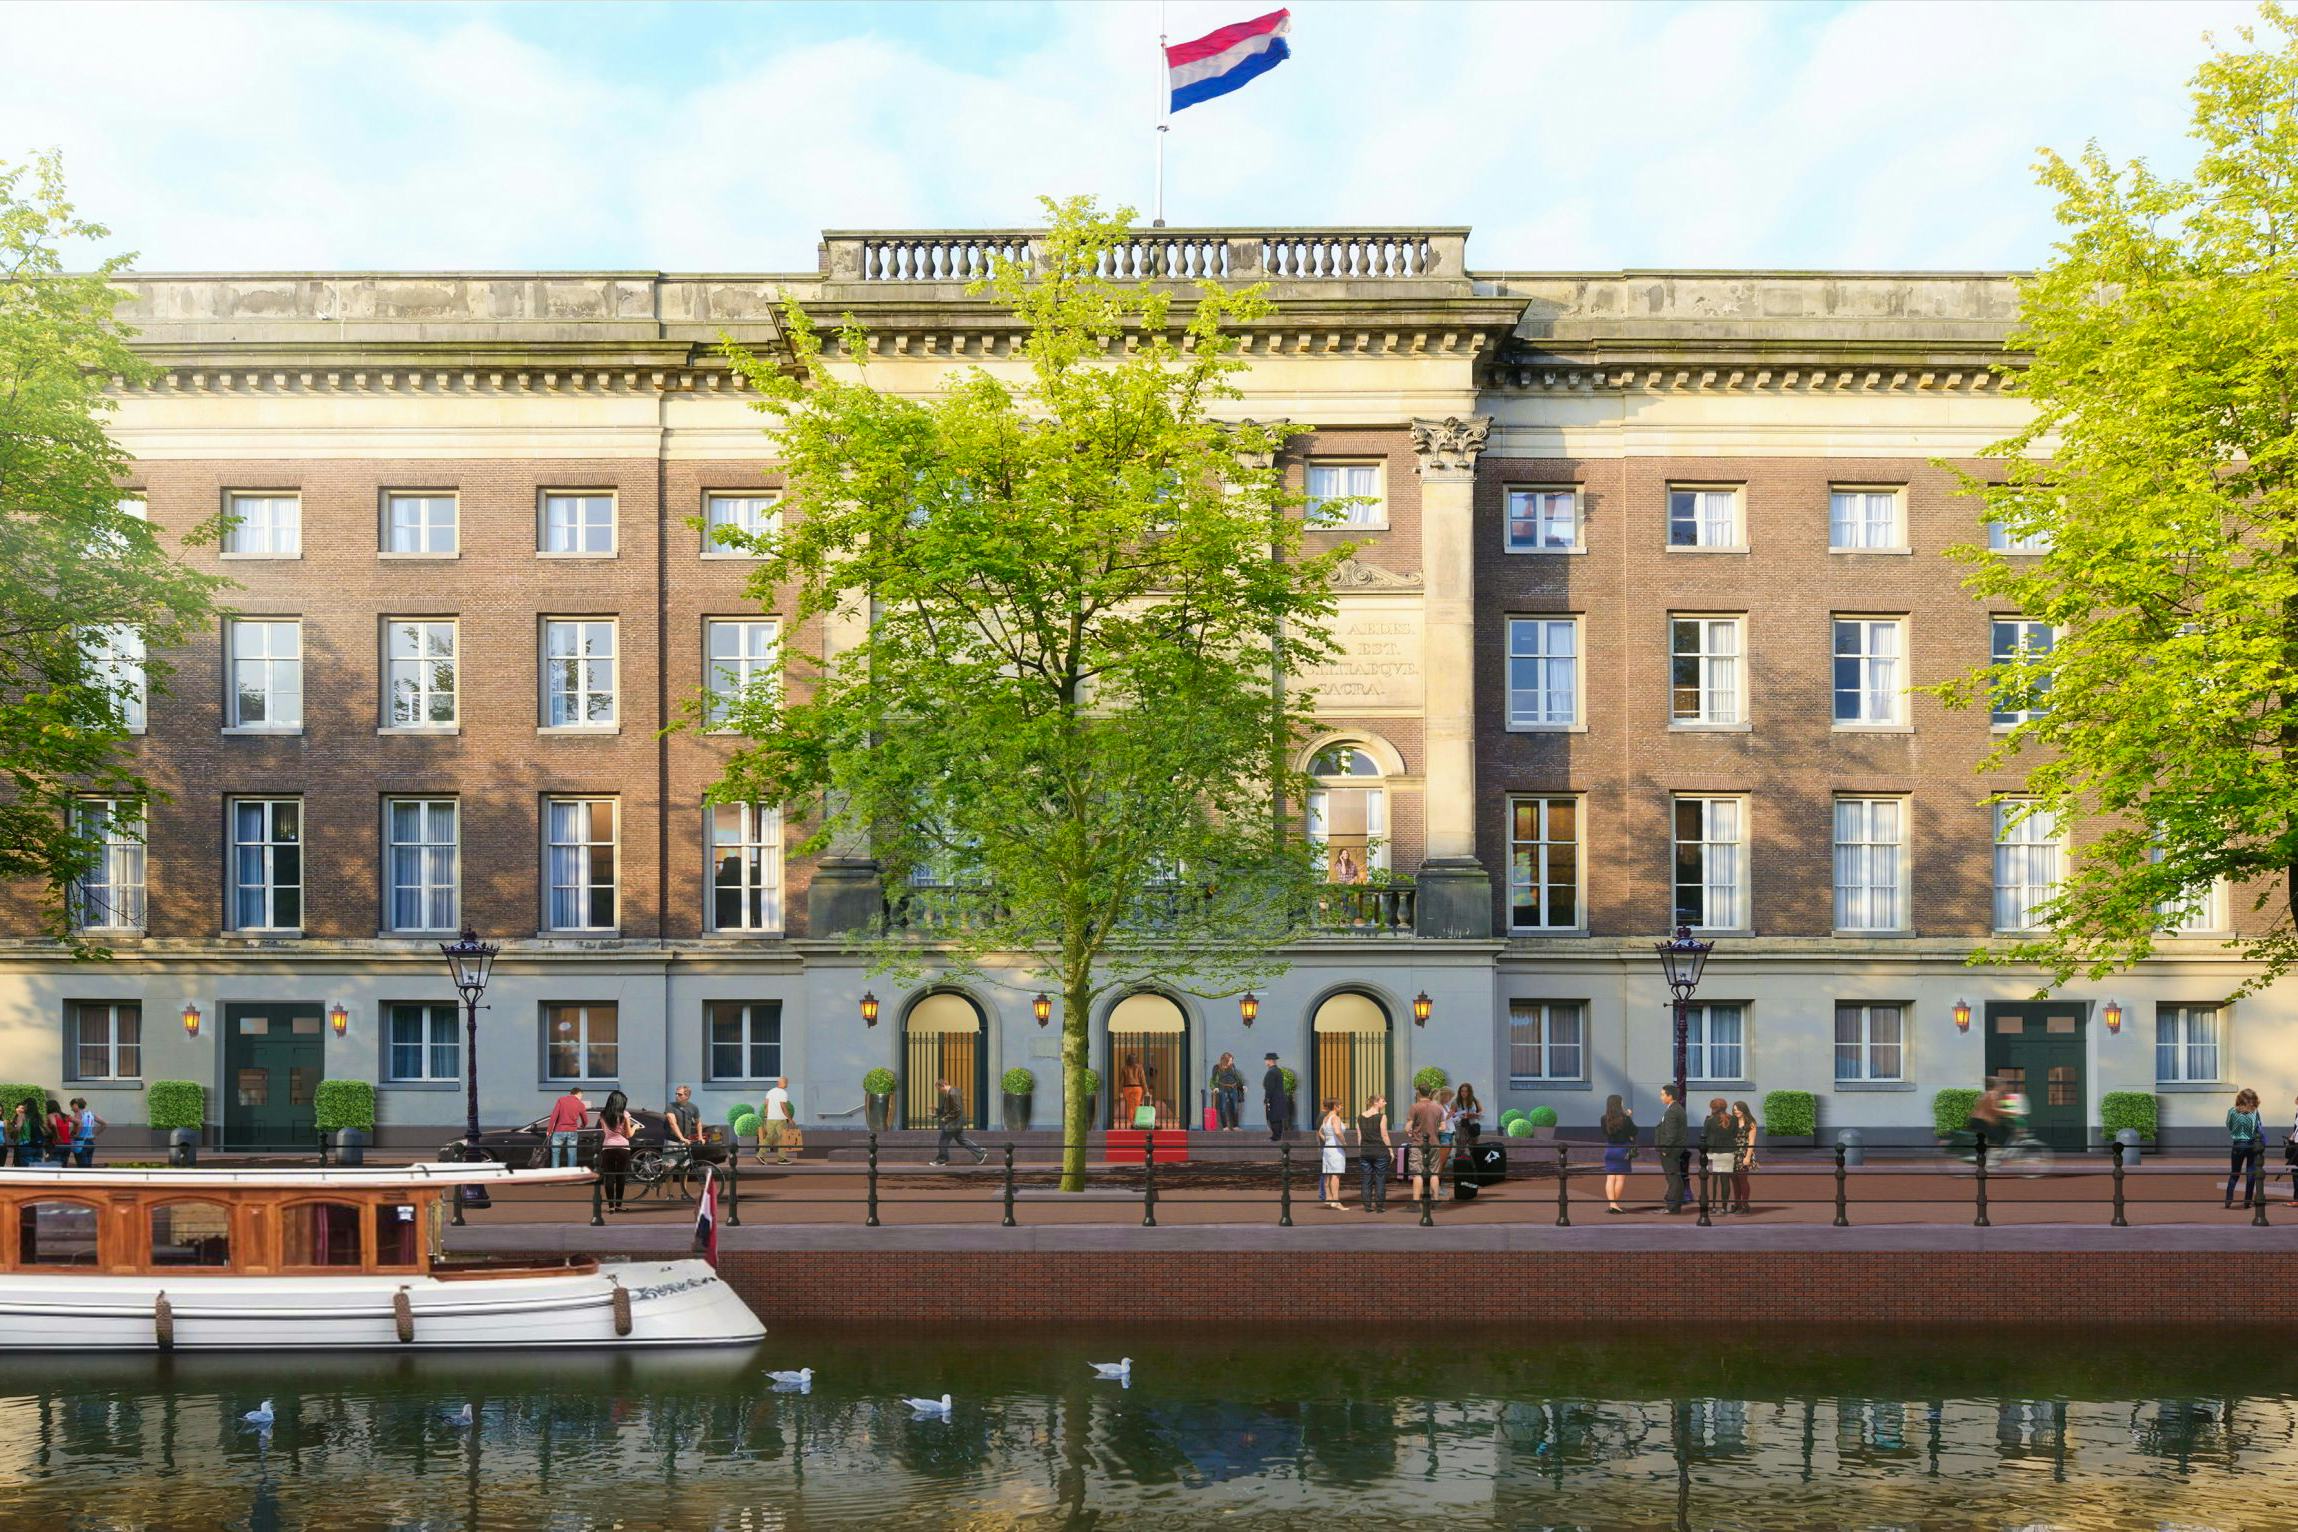 Komst luxehotel Rosewood naar Amsterdam nu officieel: open in 2023